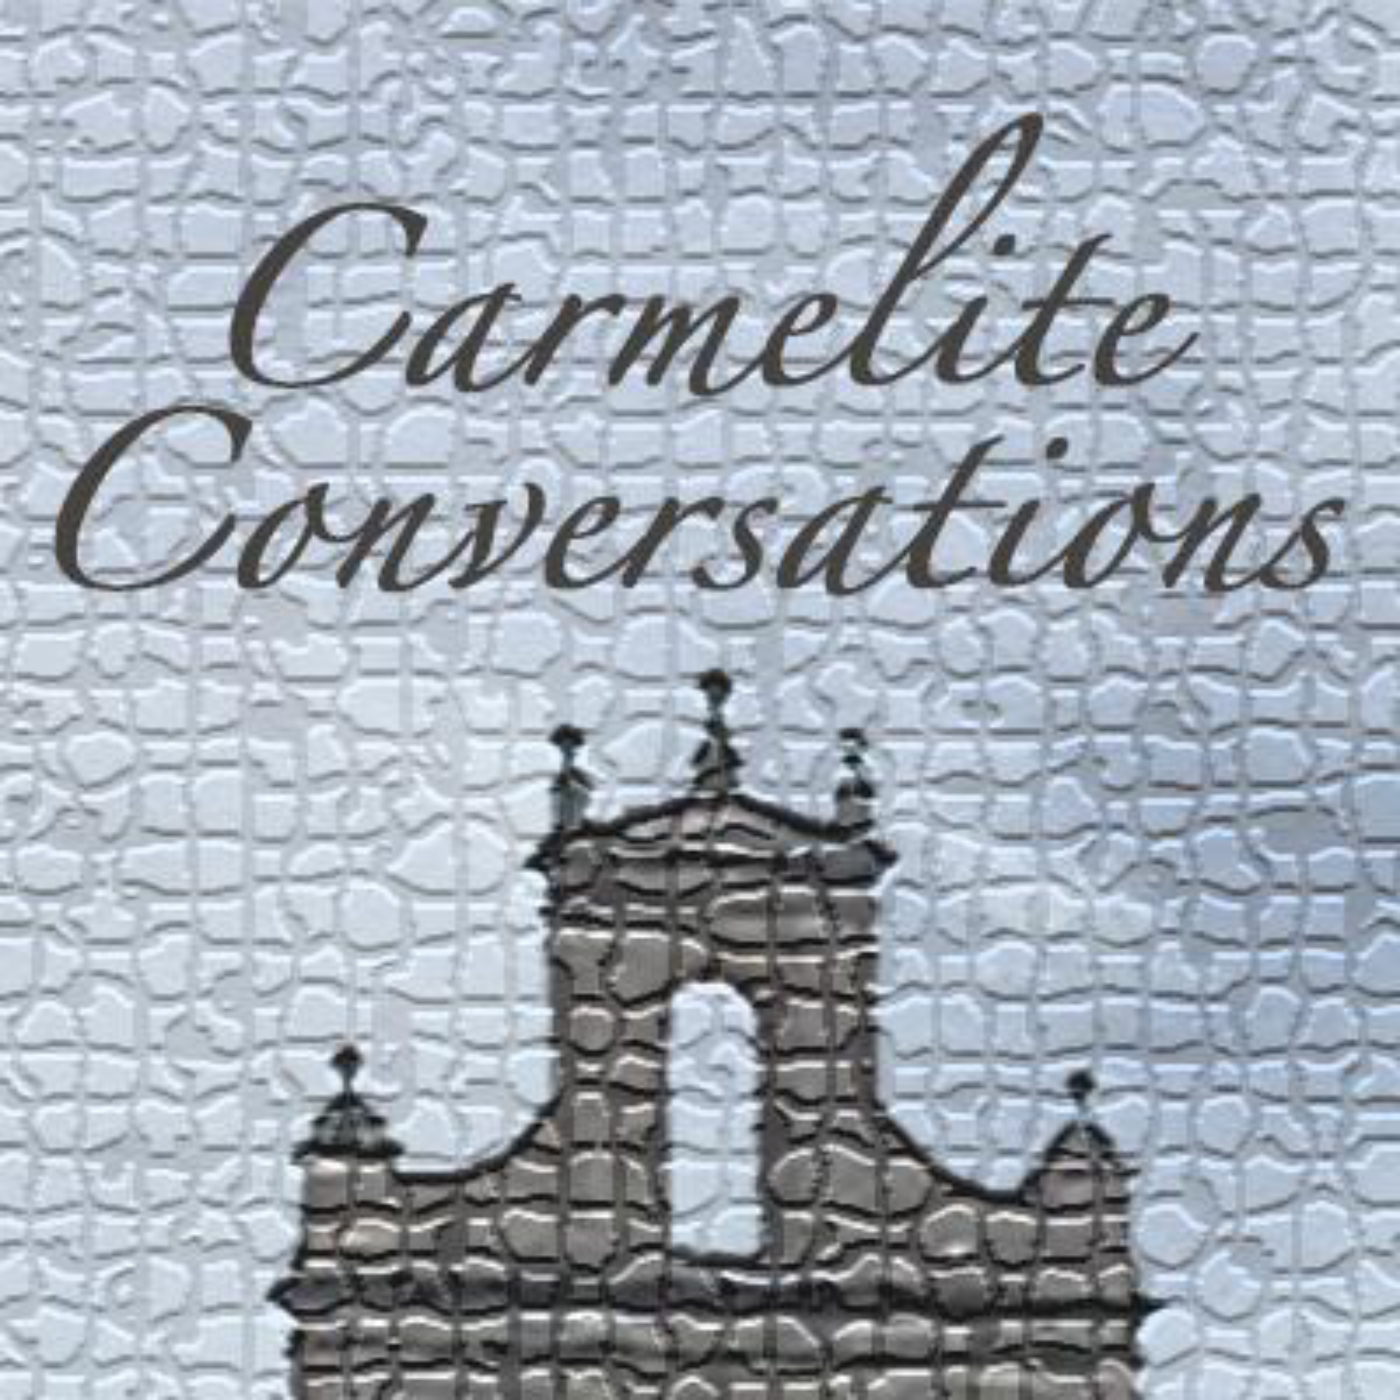 Carmelite Conversations screenshot